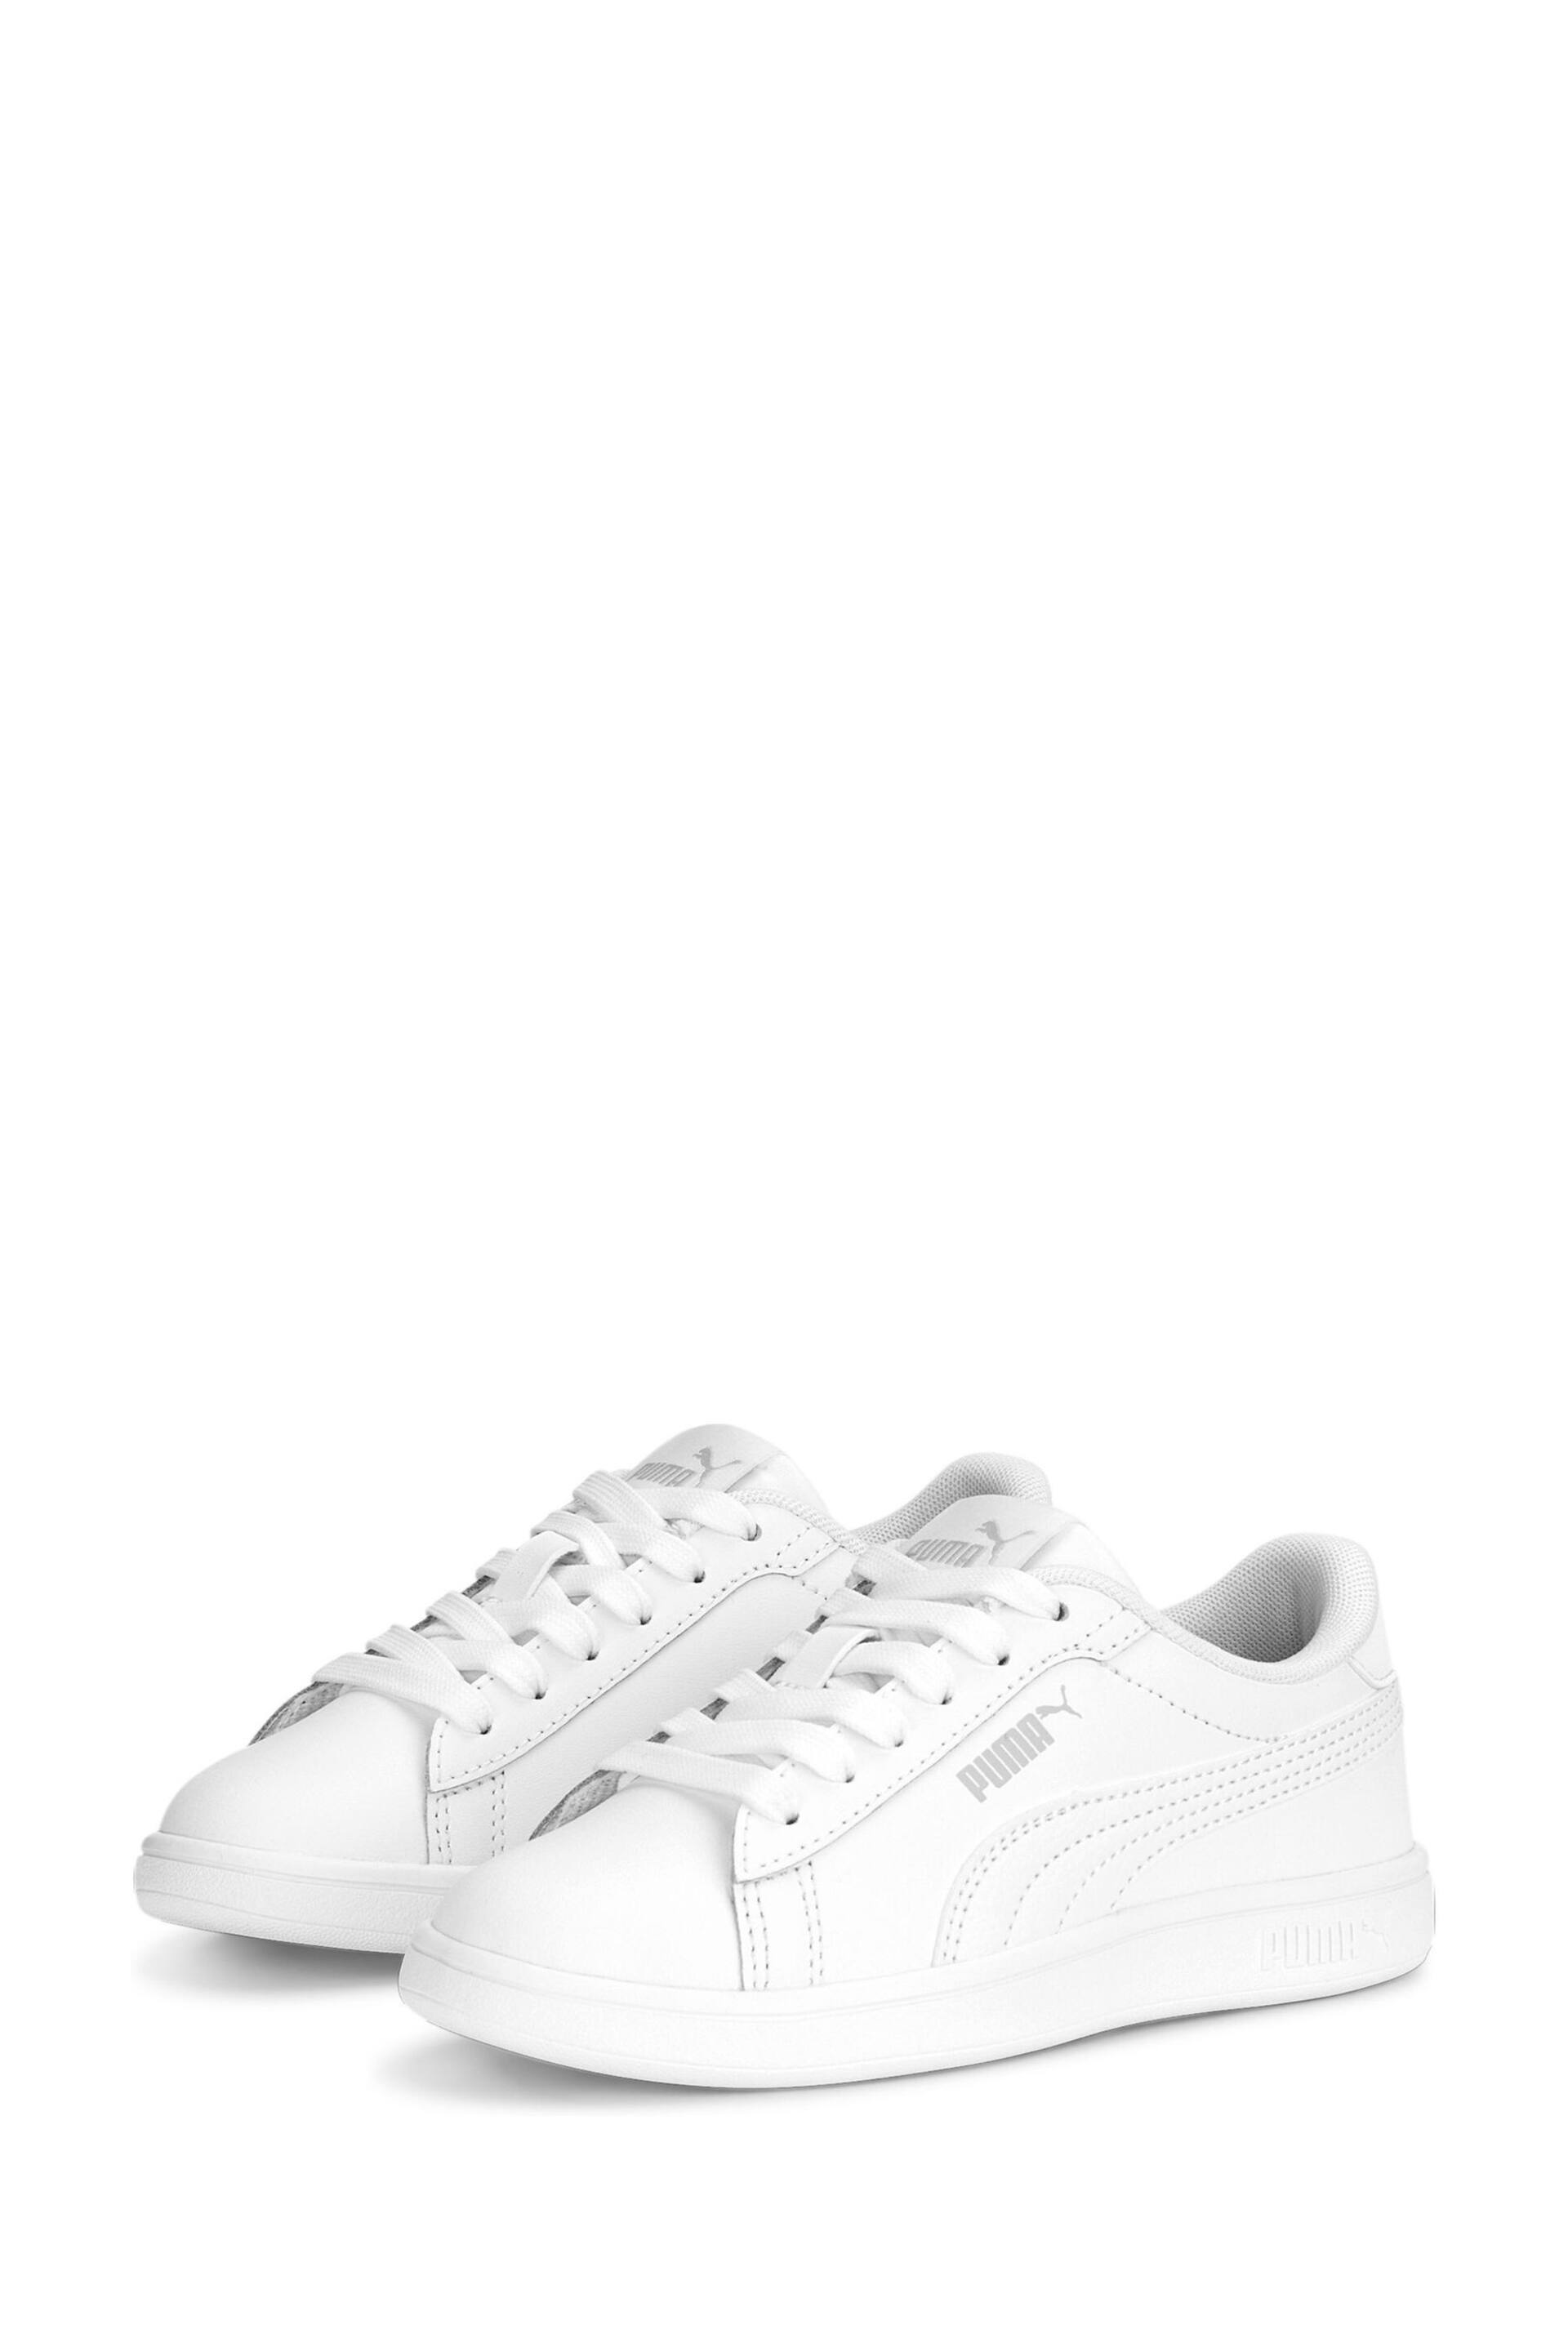 Puma White Smash 3.0 L Shoes - Image 3 of 6